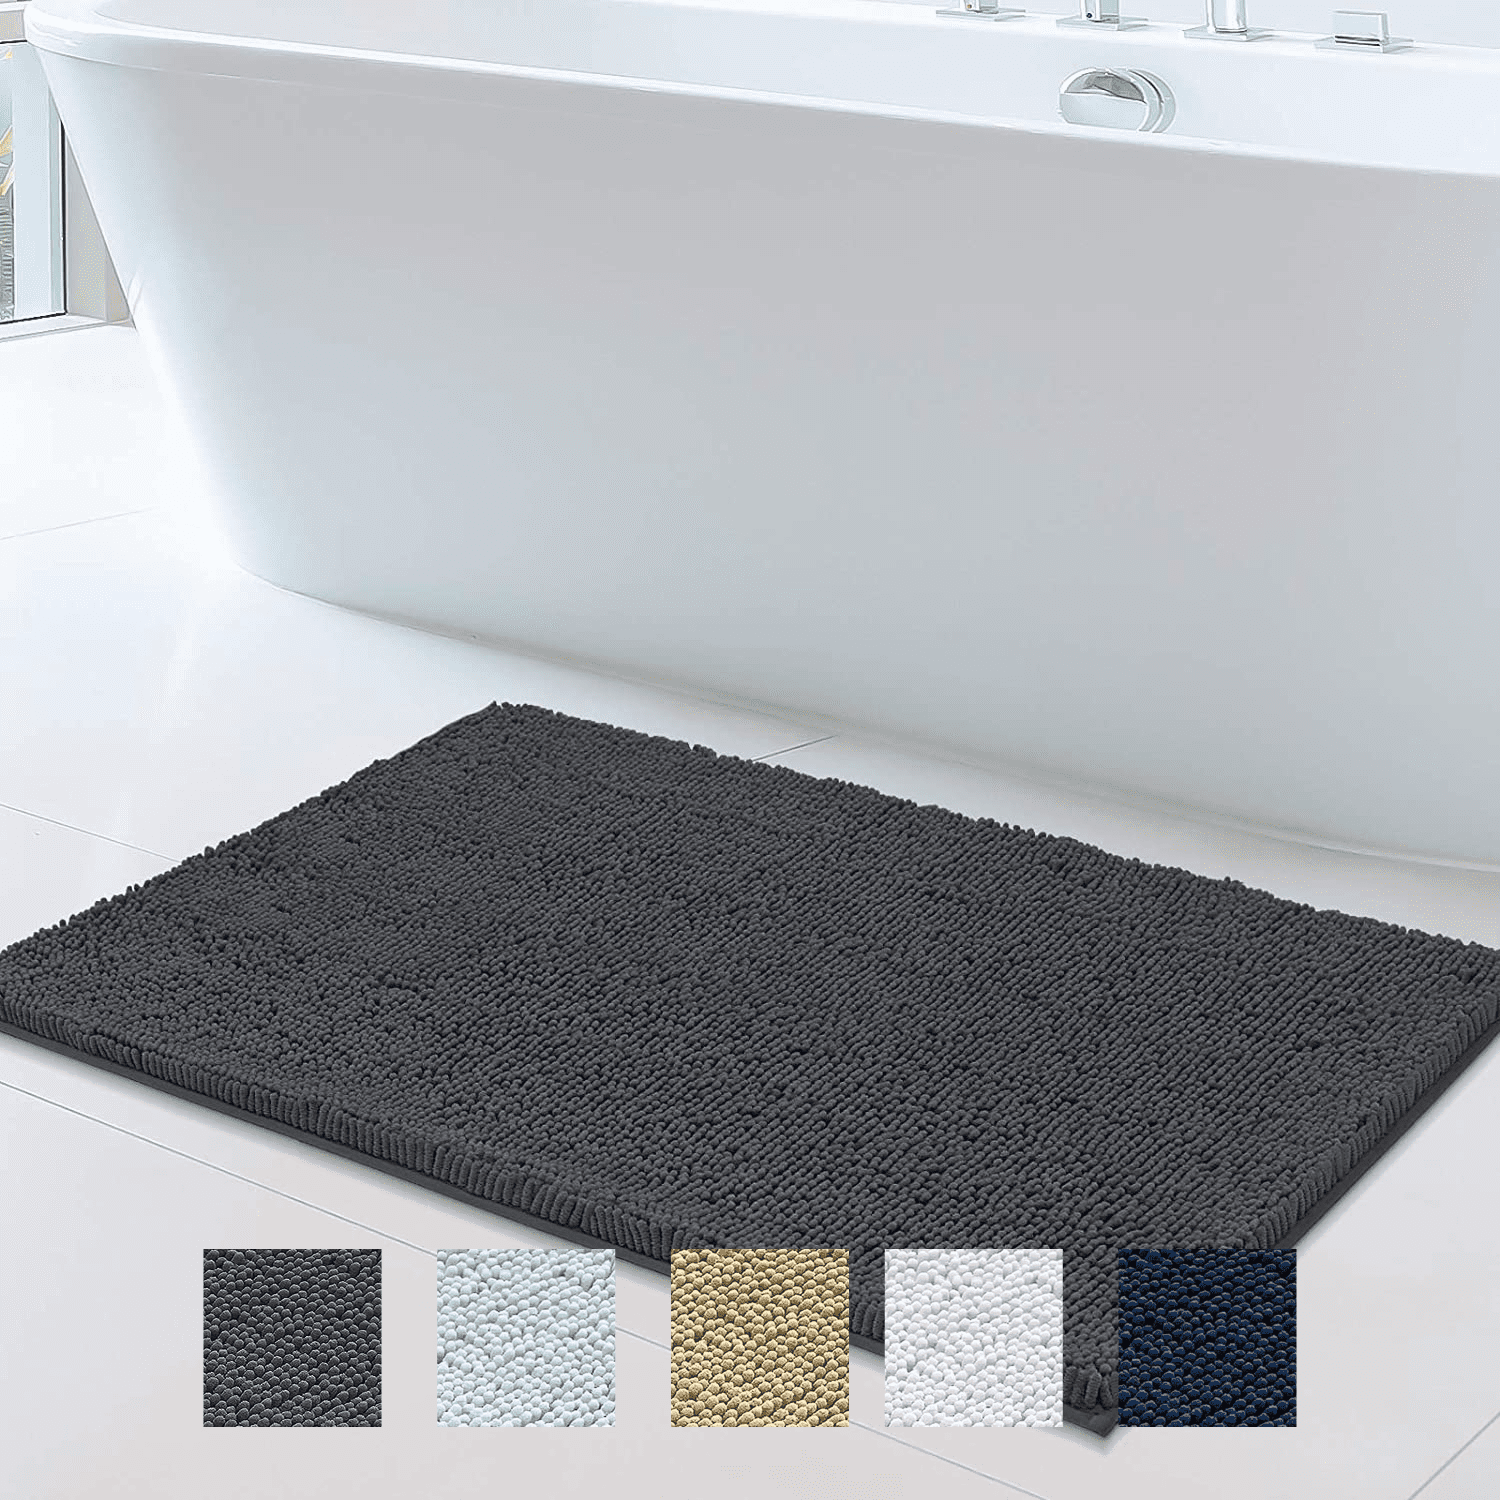 Bathroom Rugs, Chenille Bath Mats Microfiber, Charcoal Gray, 20x32,  Mayshine